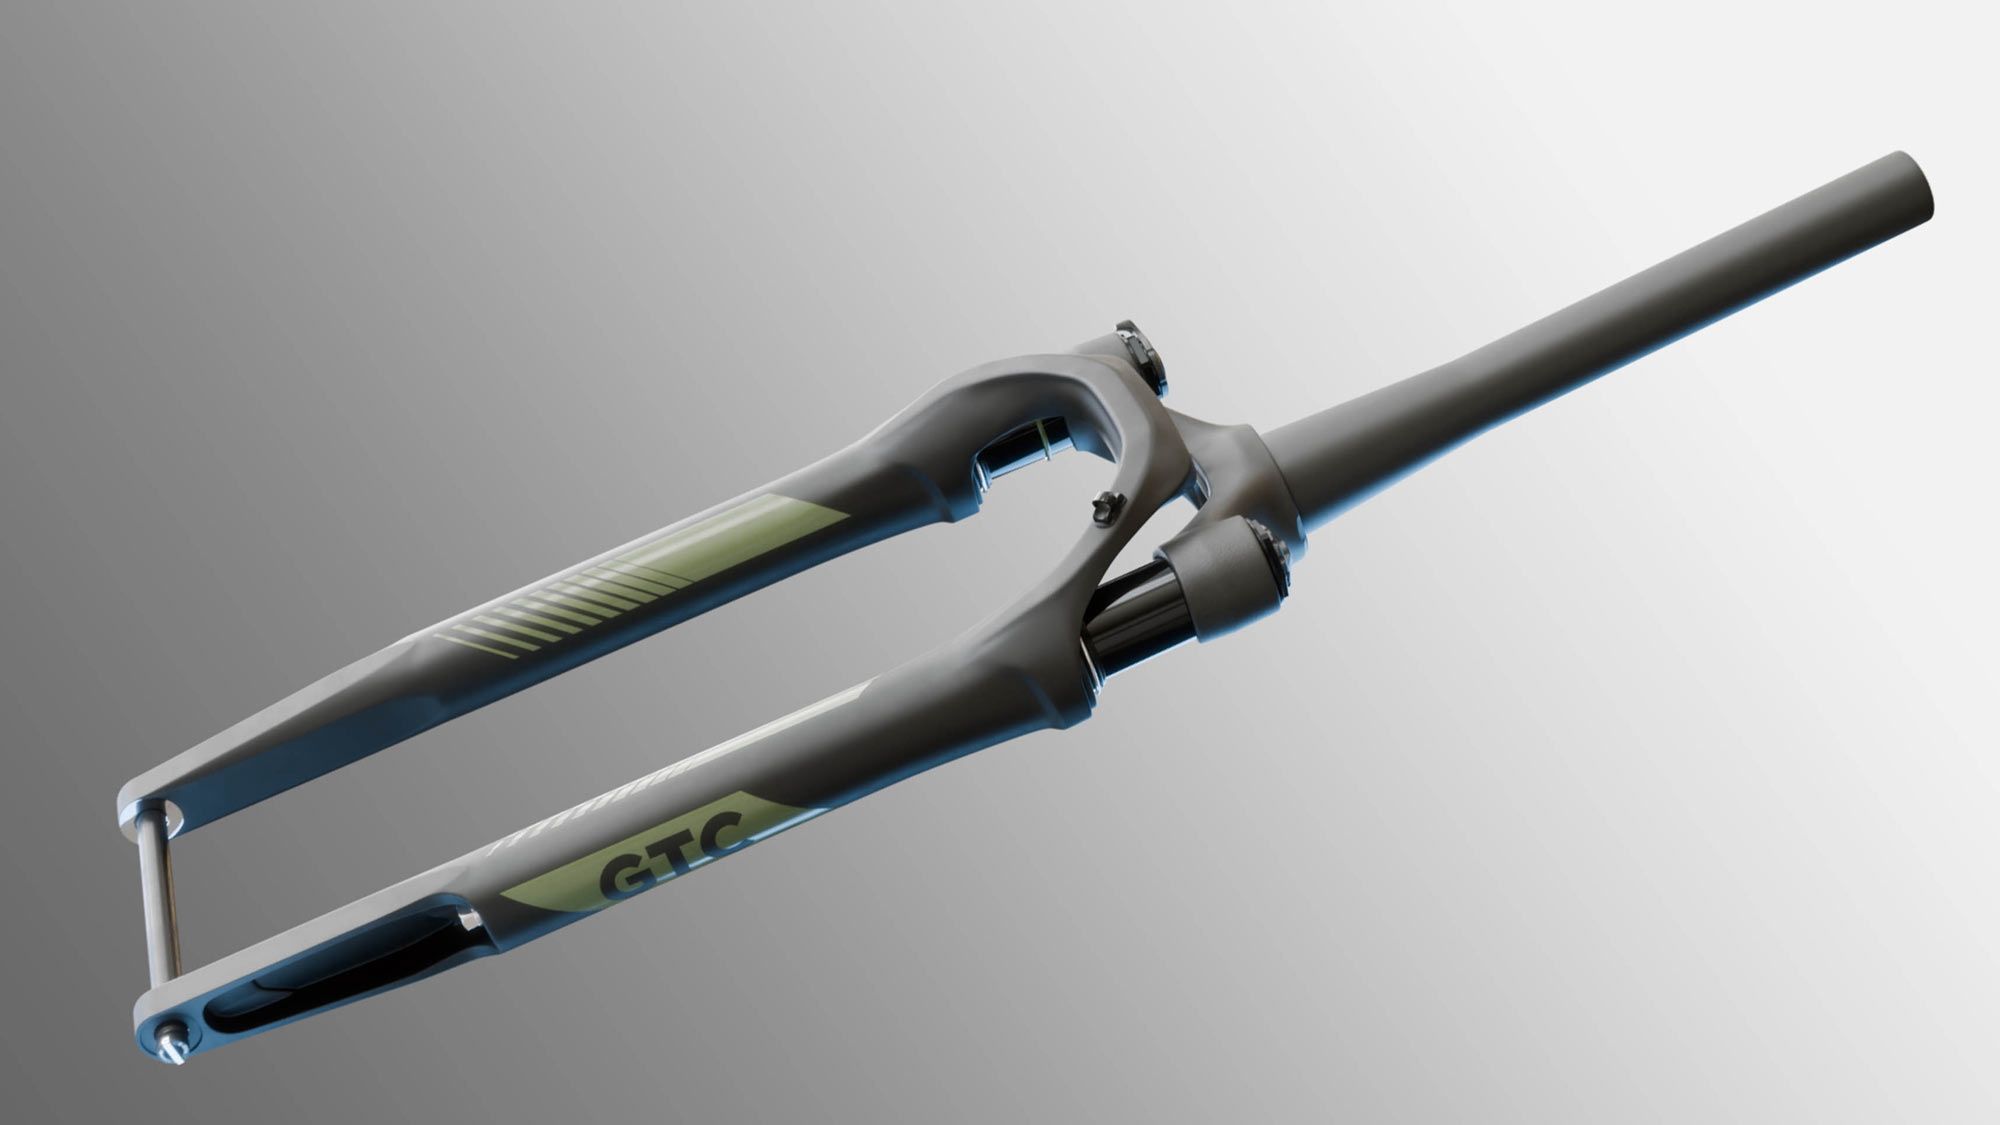 KS GTC gravel suspension fork shown at an angle